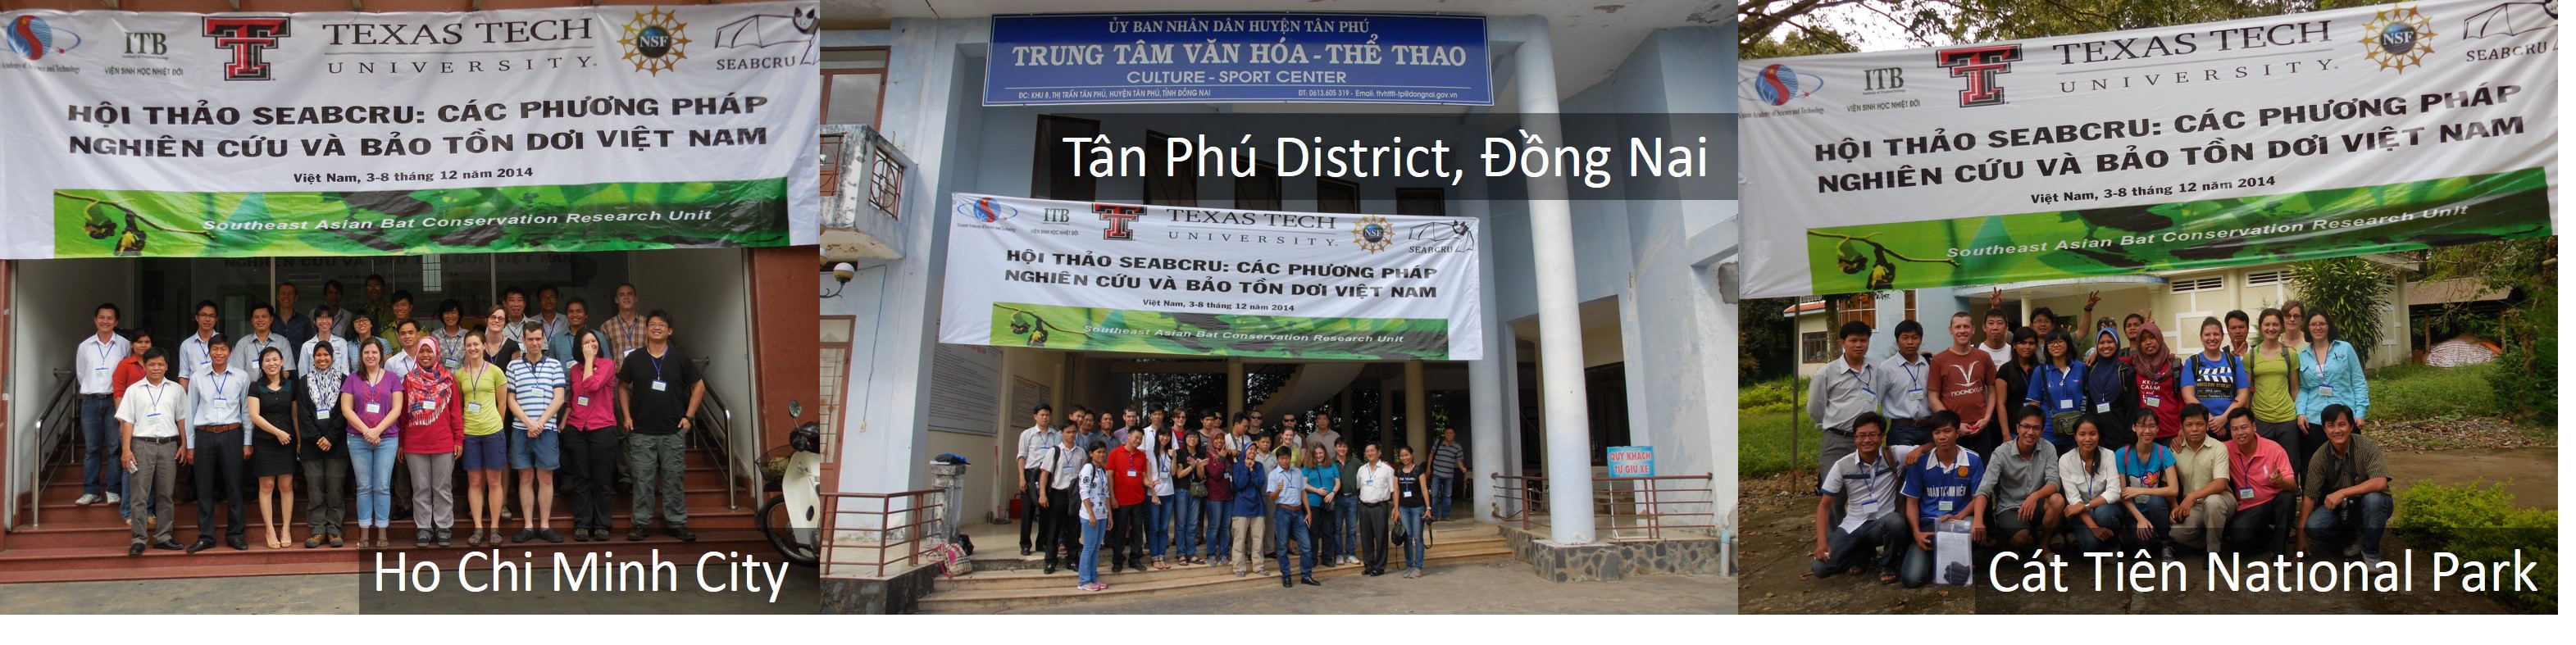 The Vietnam Bat Research Roadshow!! Ho Chi Minh City, Tan Phu District, Cat Tien National Park